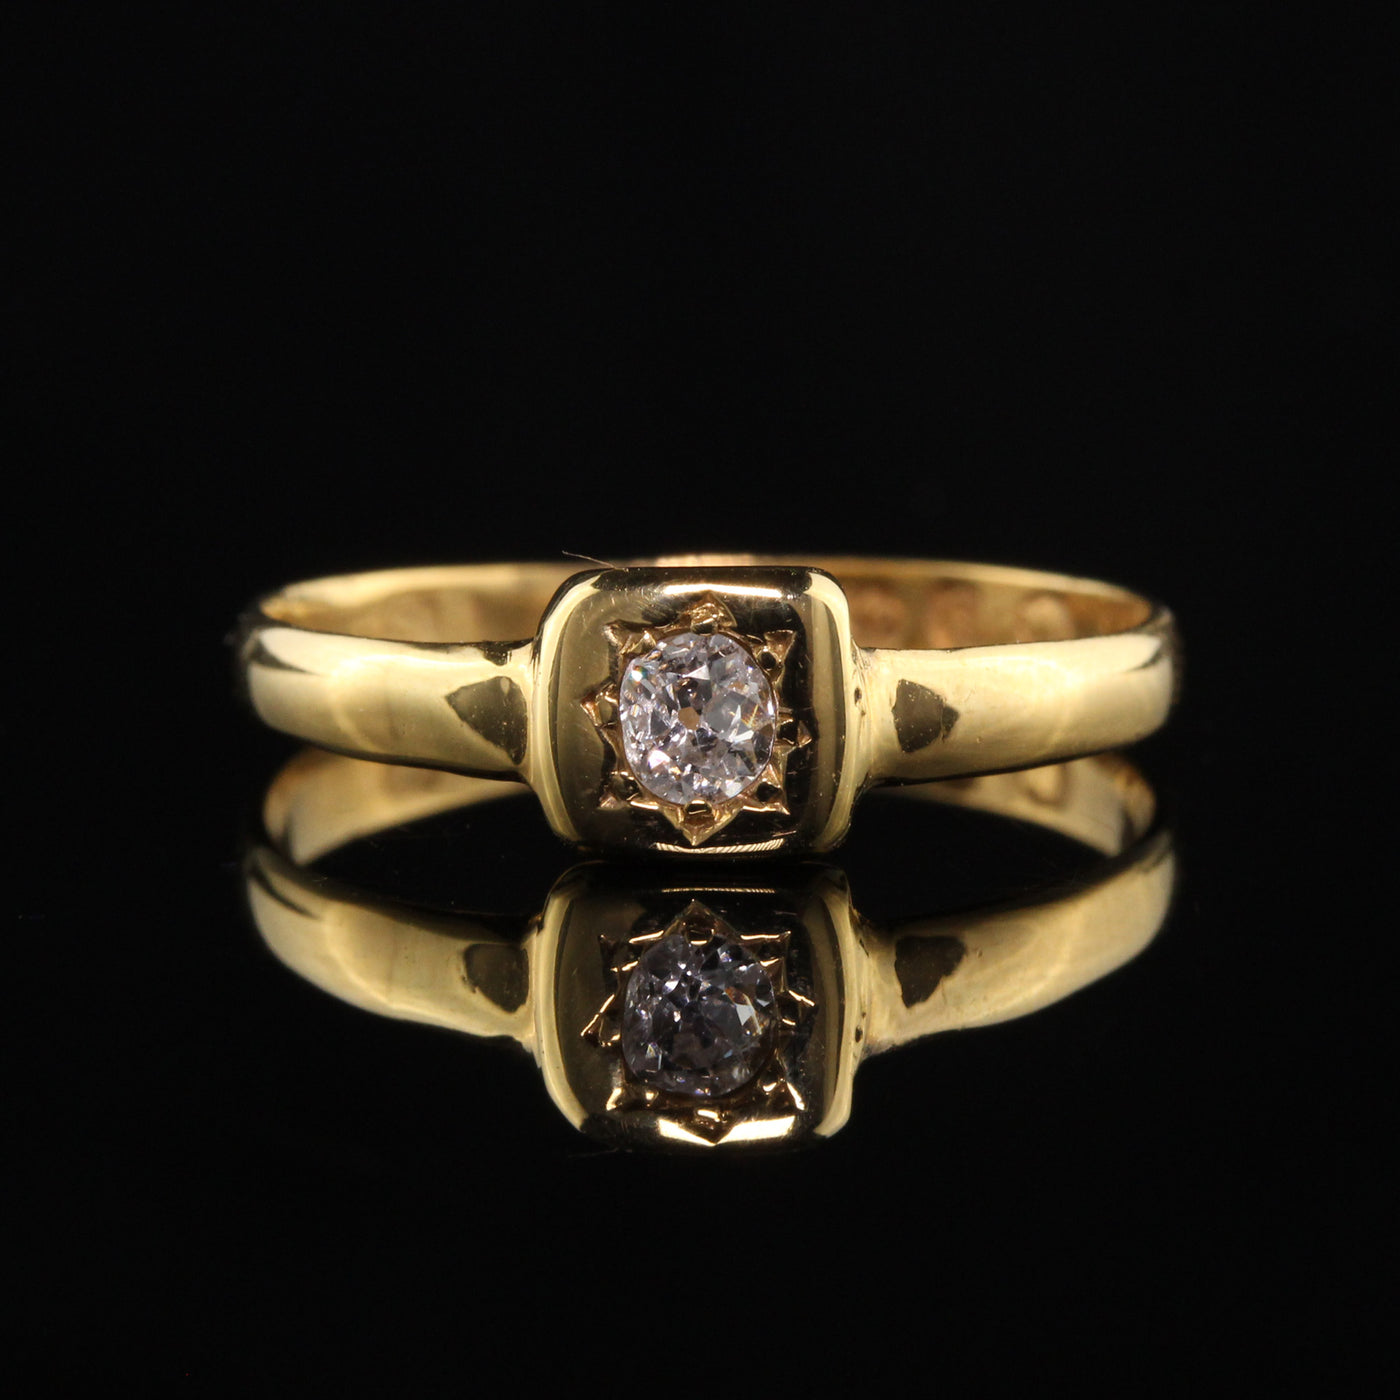 Antique Victorian 22K Yellow Gold Old Mine Diamond Ring